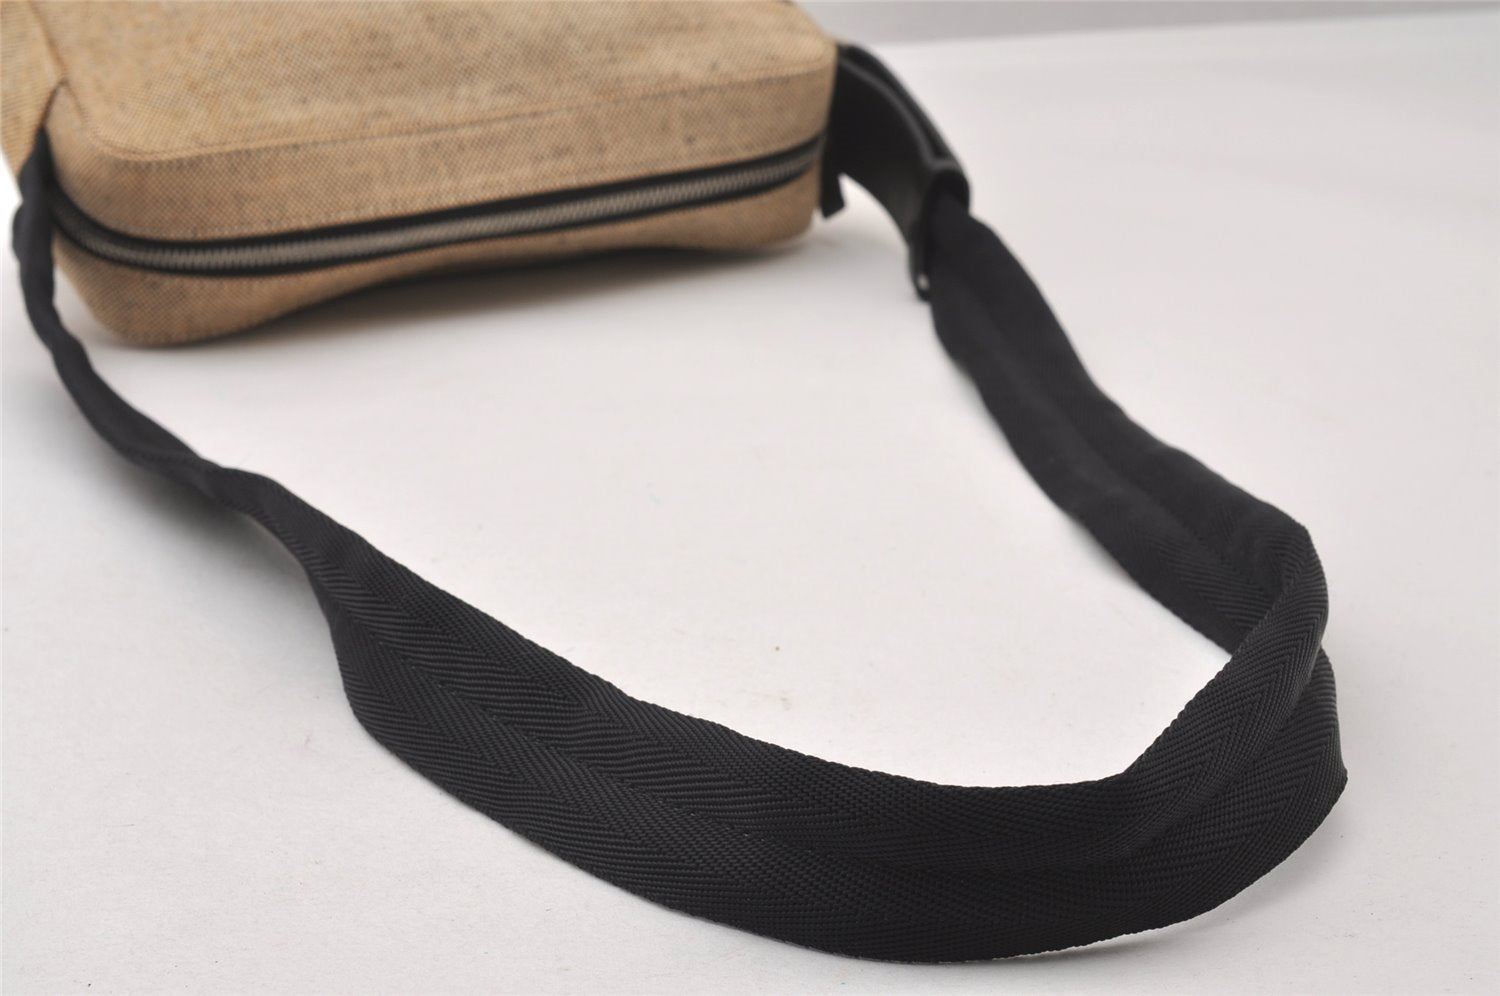 Authentic PRADA Sports Canvas Leather Shoulder Cross Body Bag Purse Beige 3275I